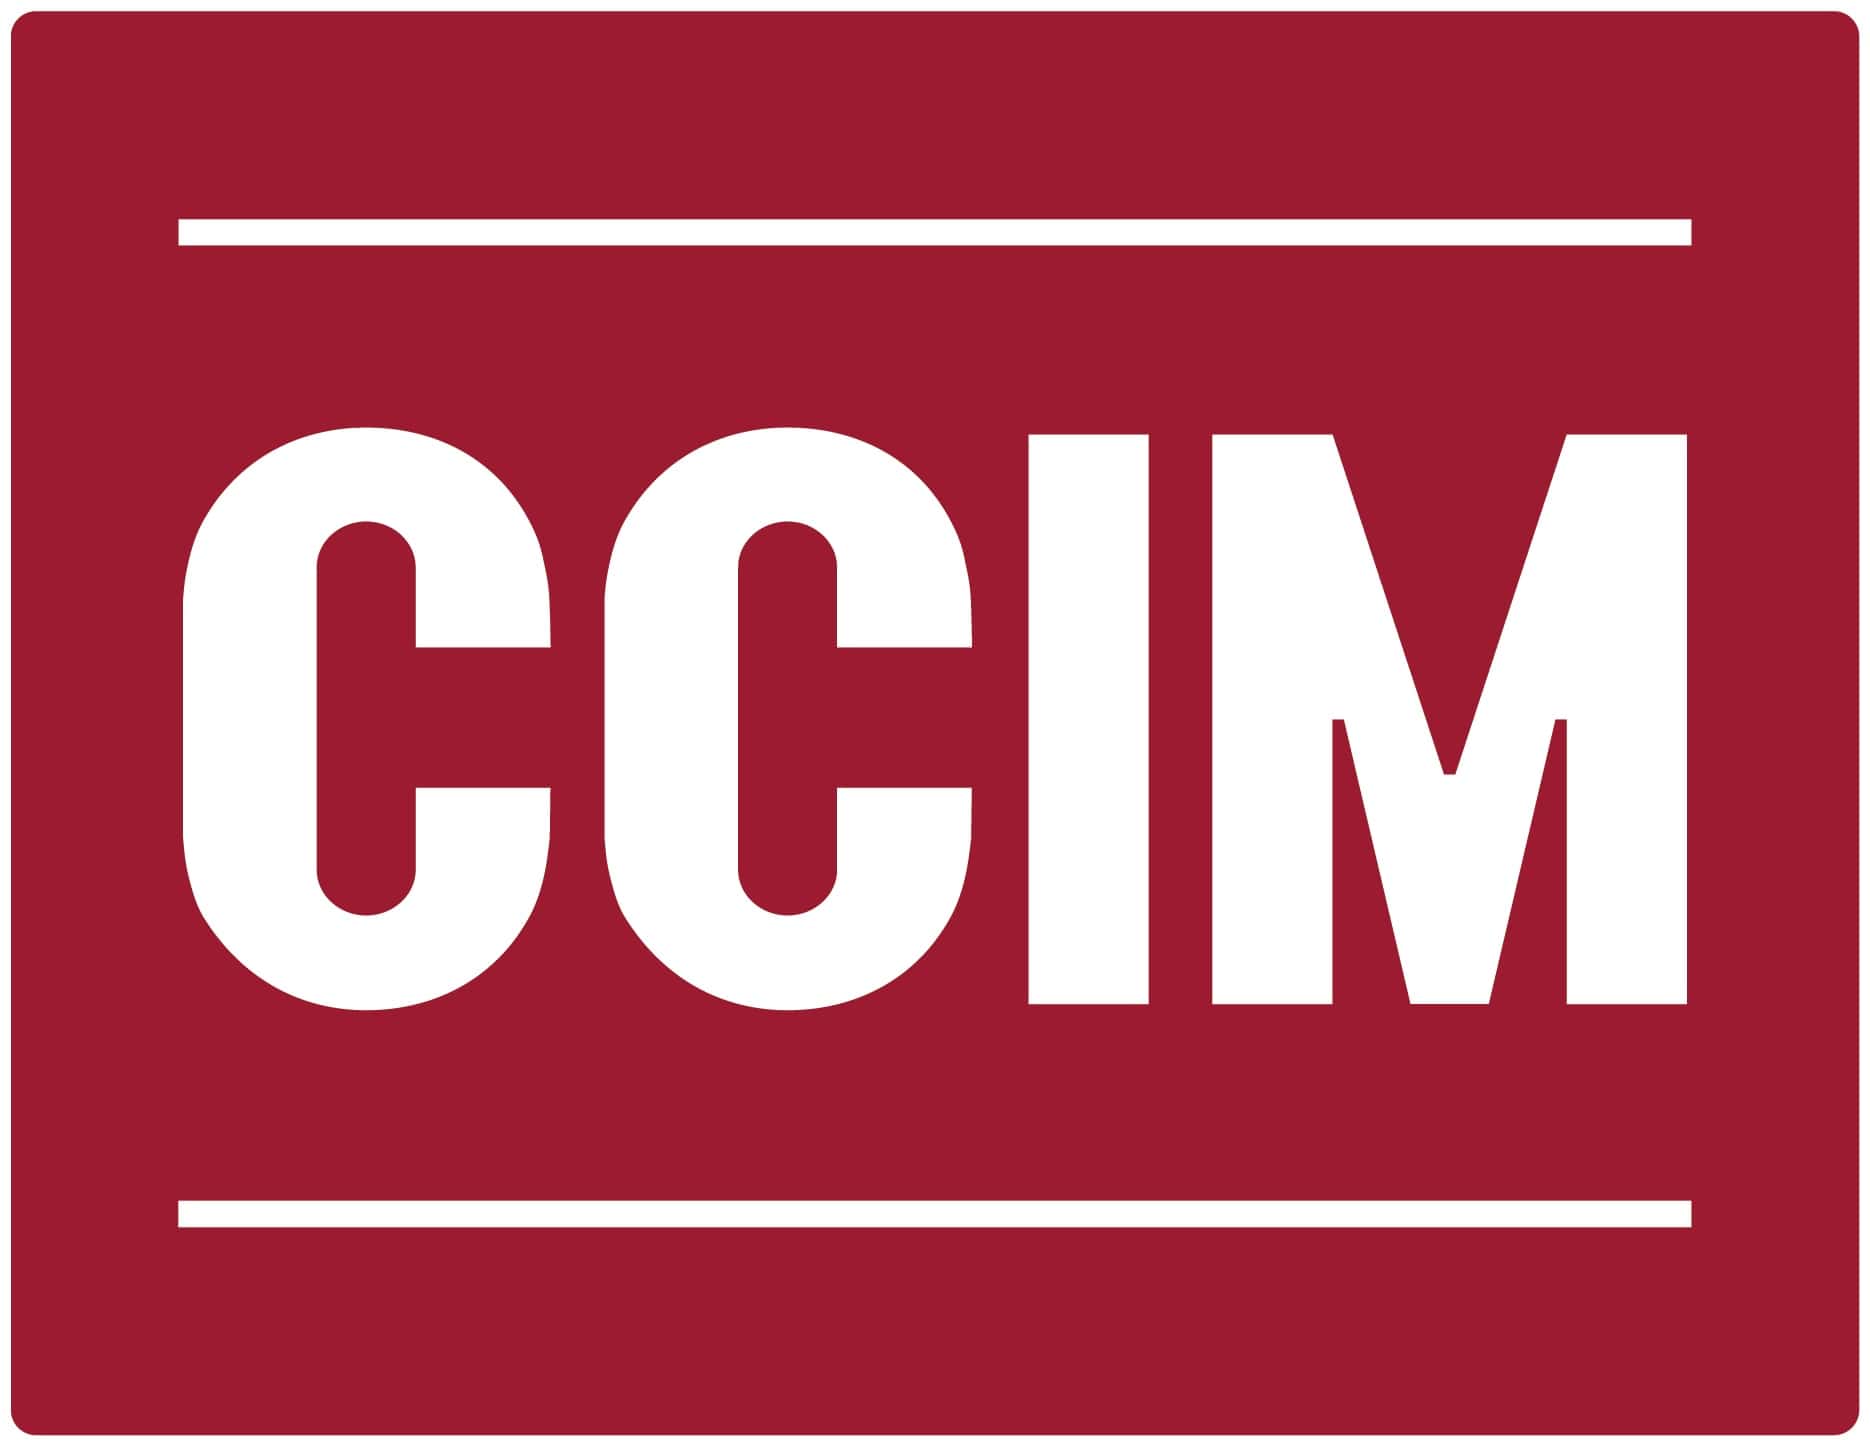 Florida CCIM Chapter